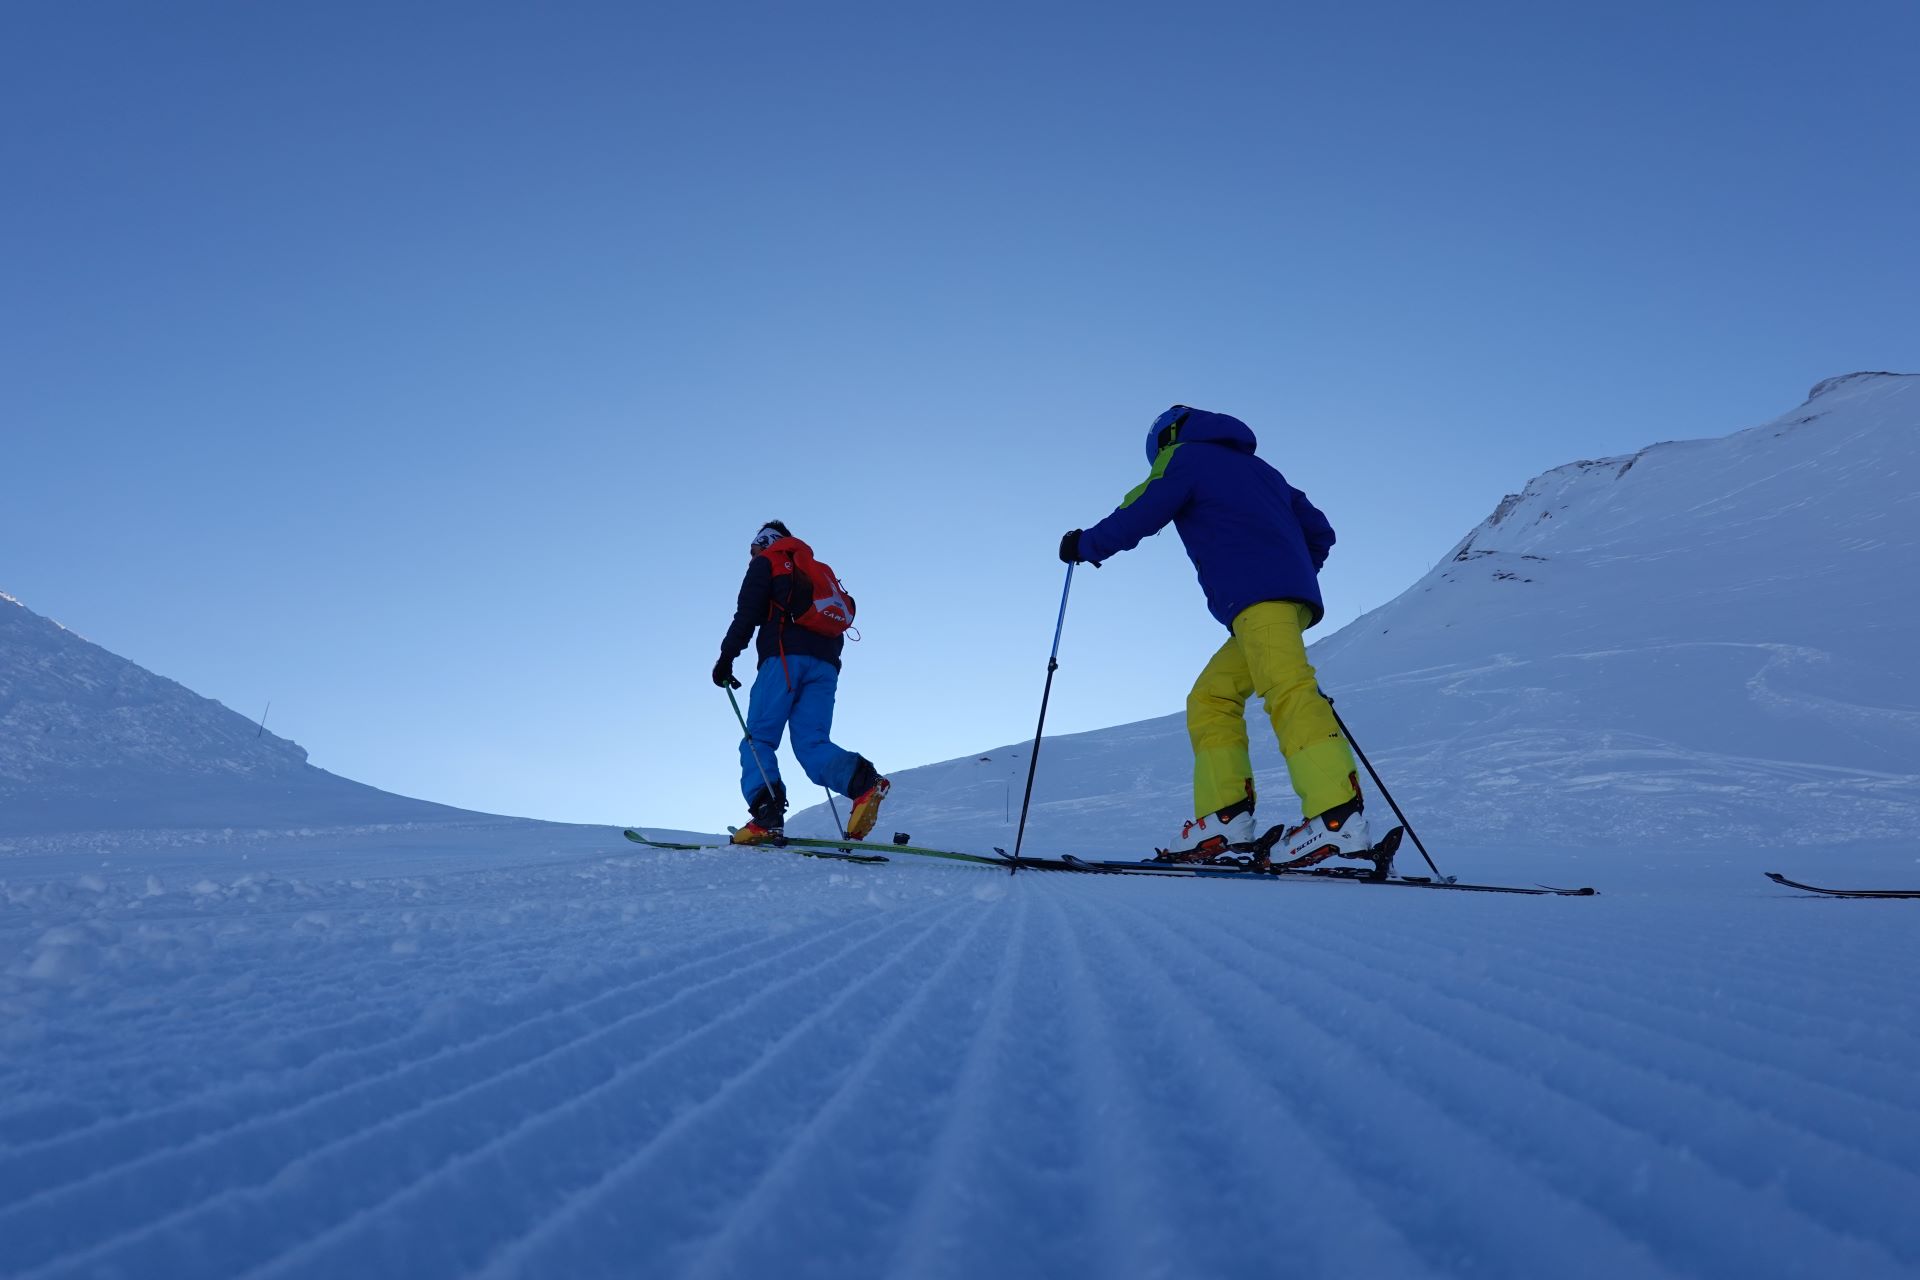 premieres-traces-ski-splitboard-montagne-station-de-ski-oxygene-ski-collection - © Oxygène ski